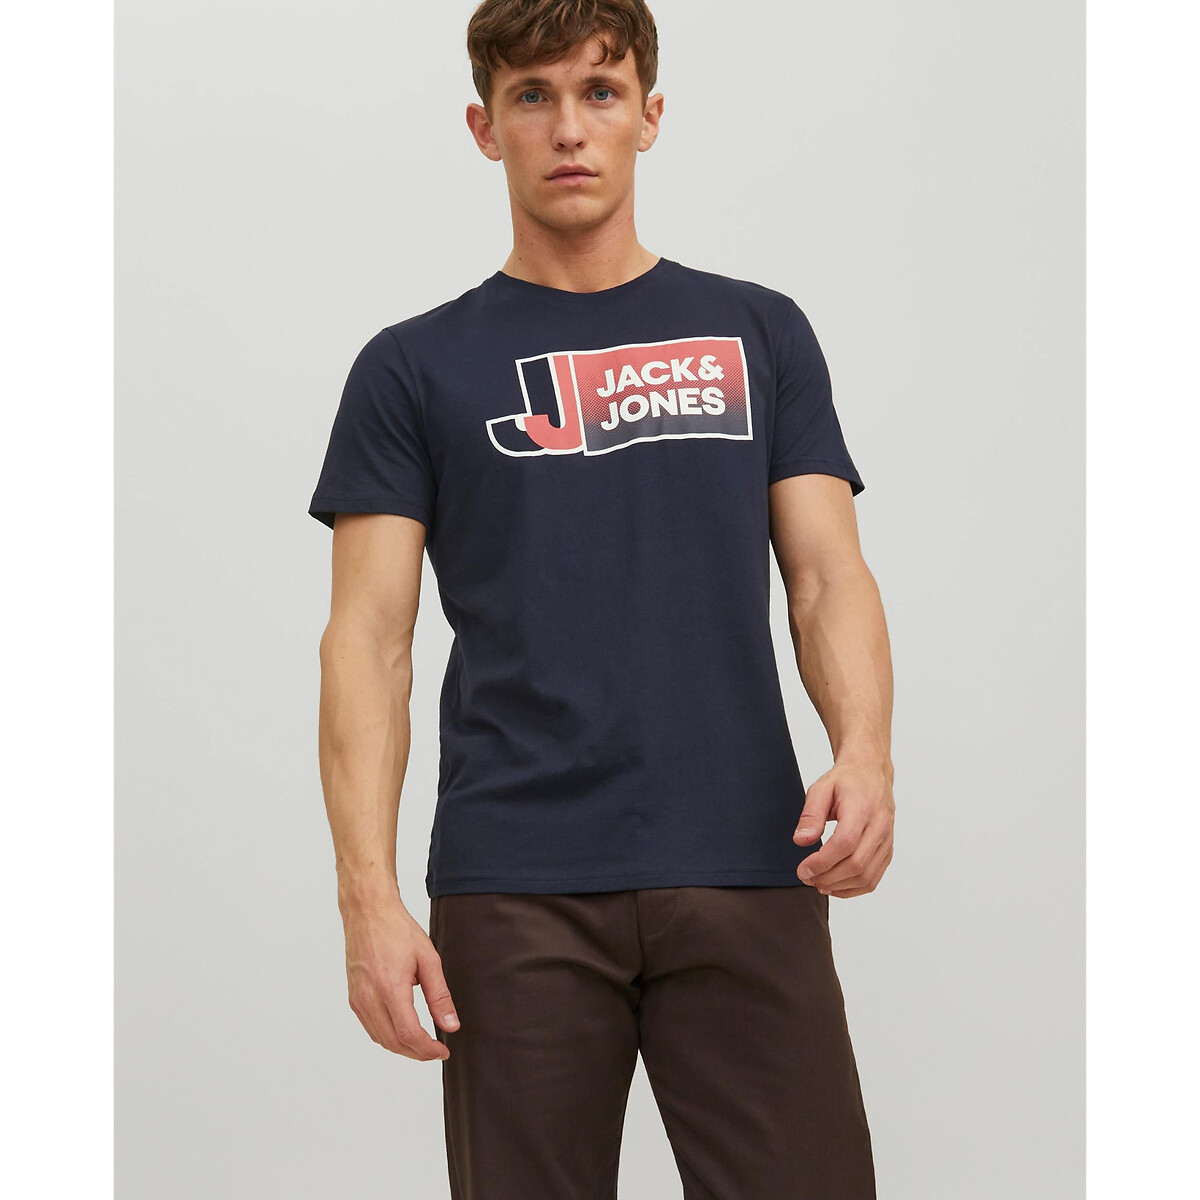 T-shirt logan, runder ausschnitt marine La Jones | Redoute Jack 